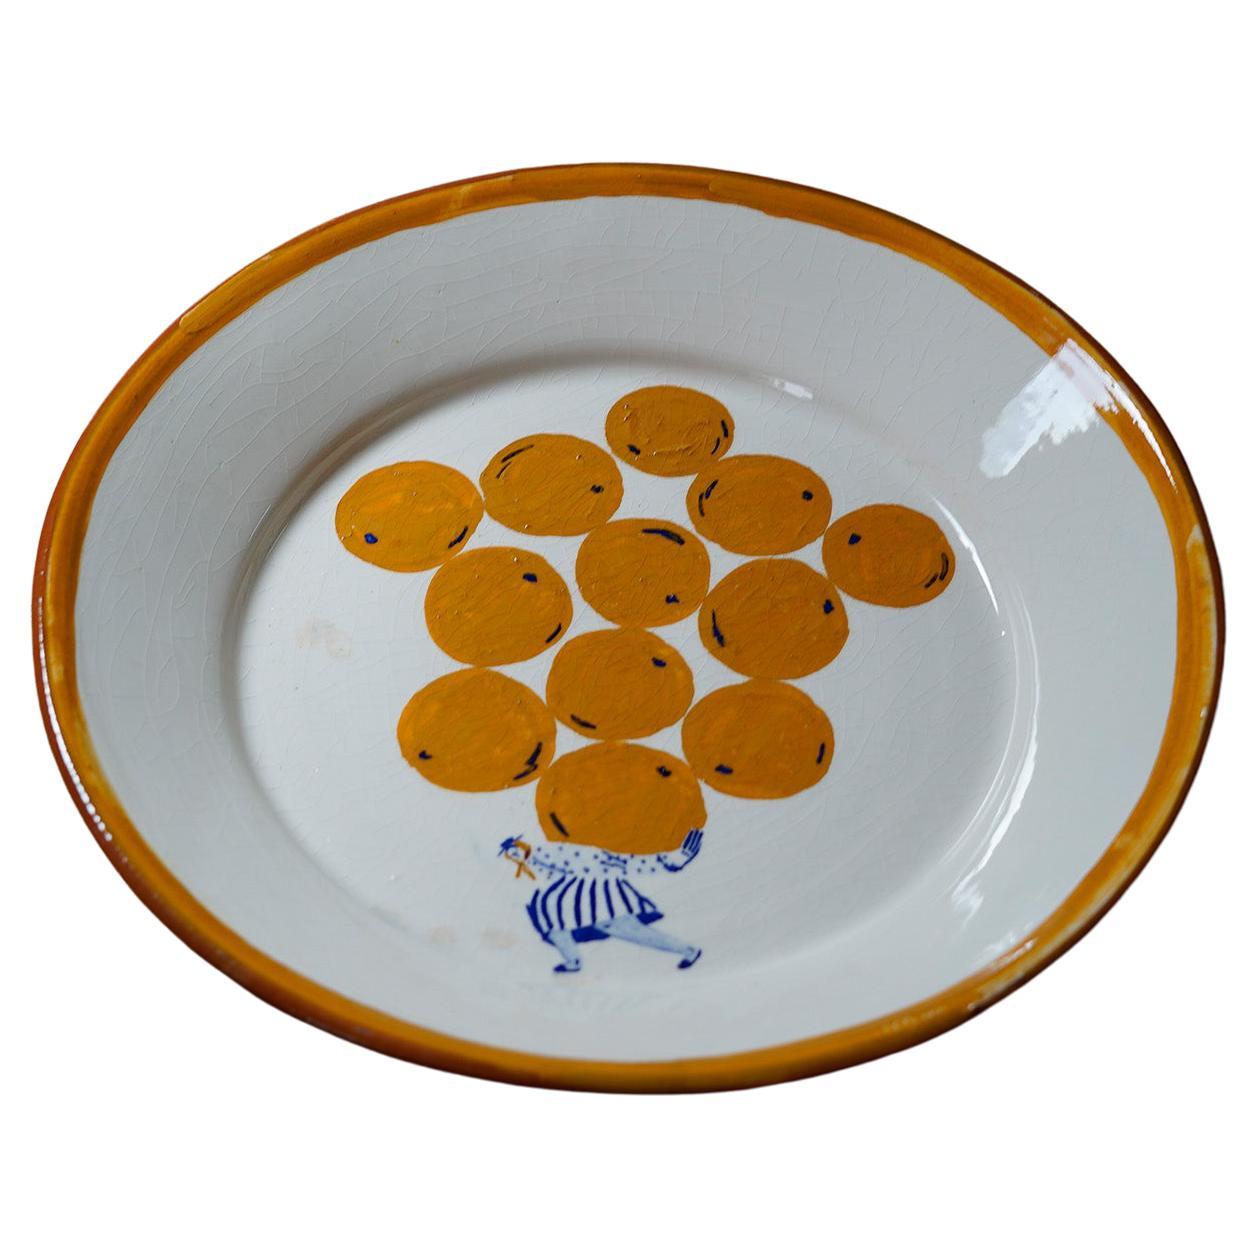 Ameixas Decorative Plate by Mariana, a Miserável for Tasco, Handmade Terracotta For Sale